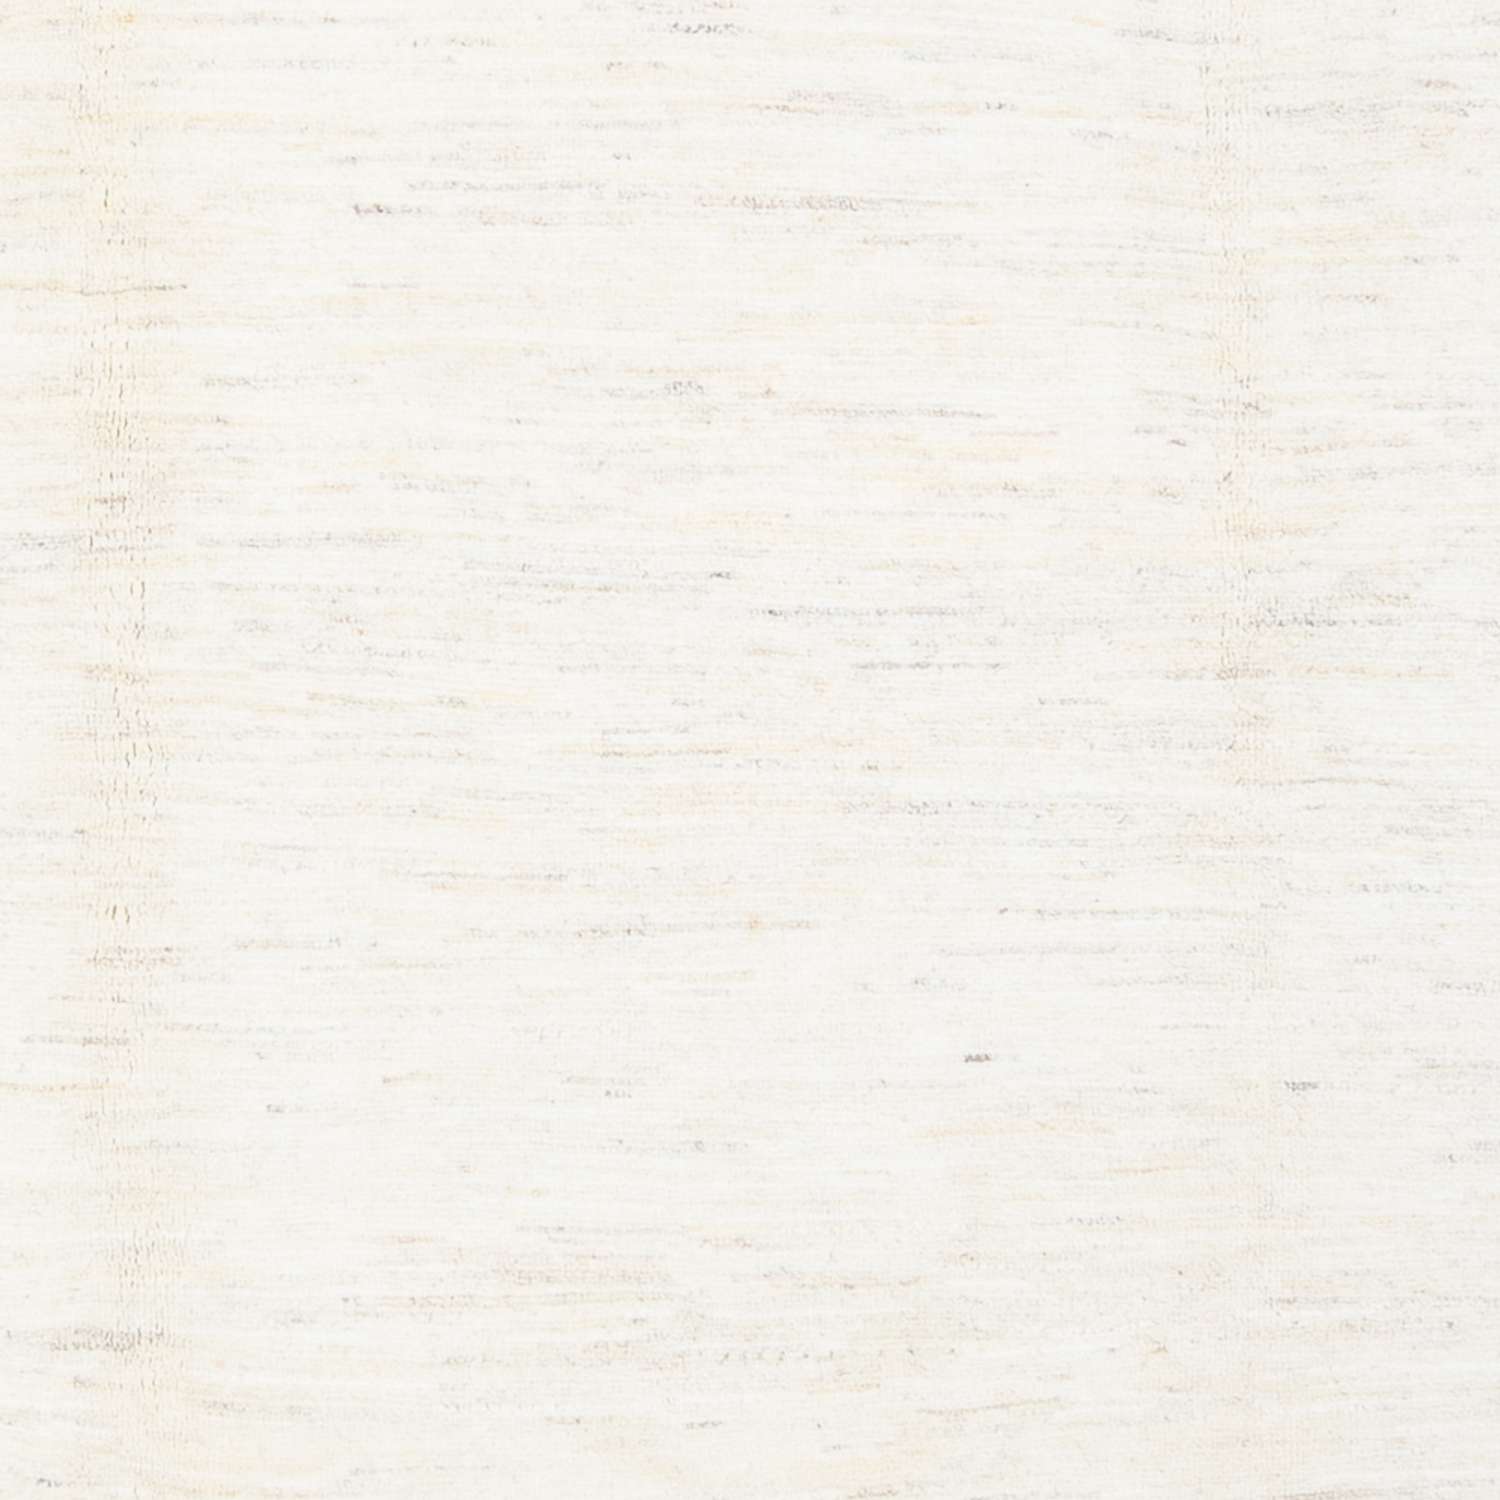 Gabbeh-teppe - persisk square  - 207 x 207 cm - hvit